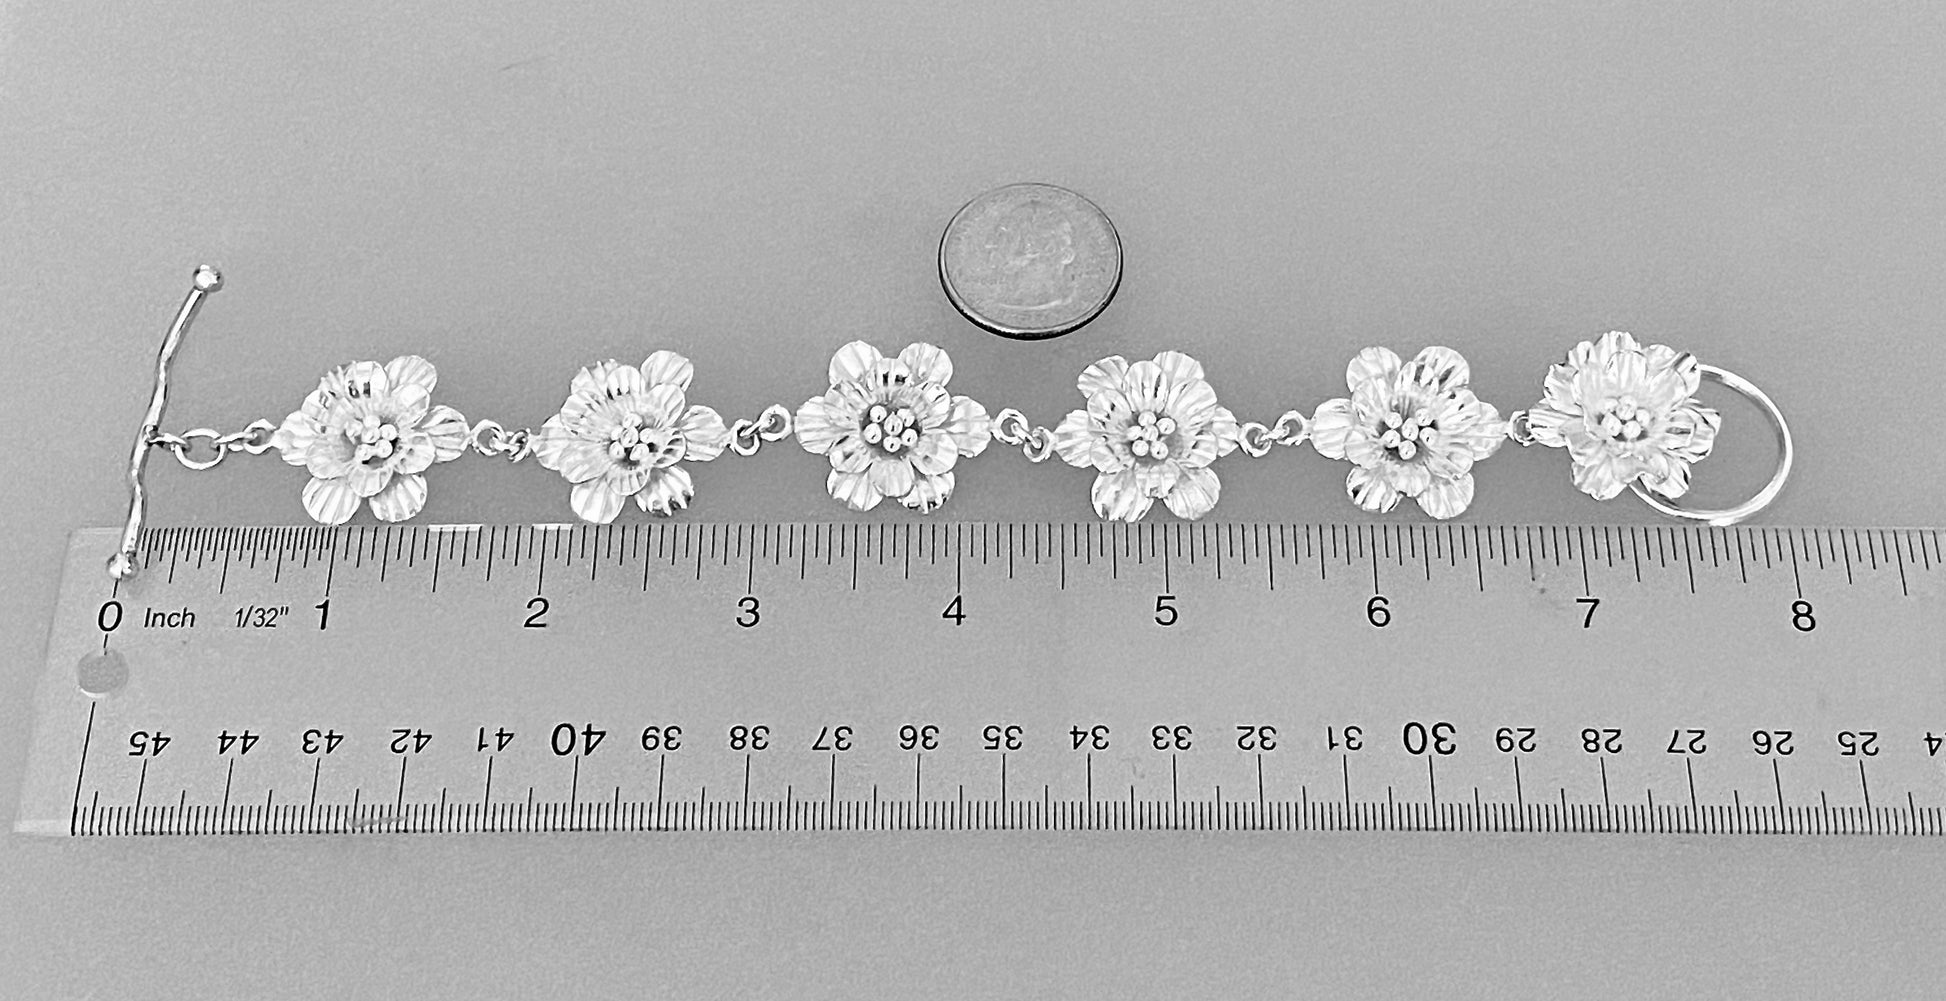 Handmade 999 Fine Silver 8 Open Petal Flower Bracelet with Toggle Clasp